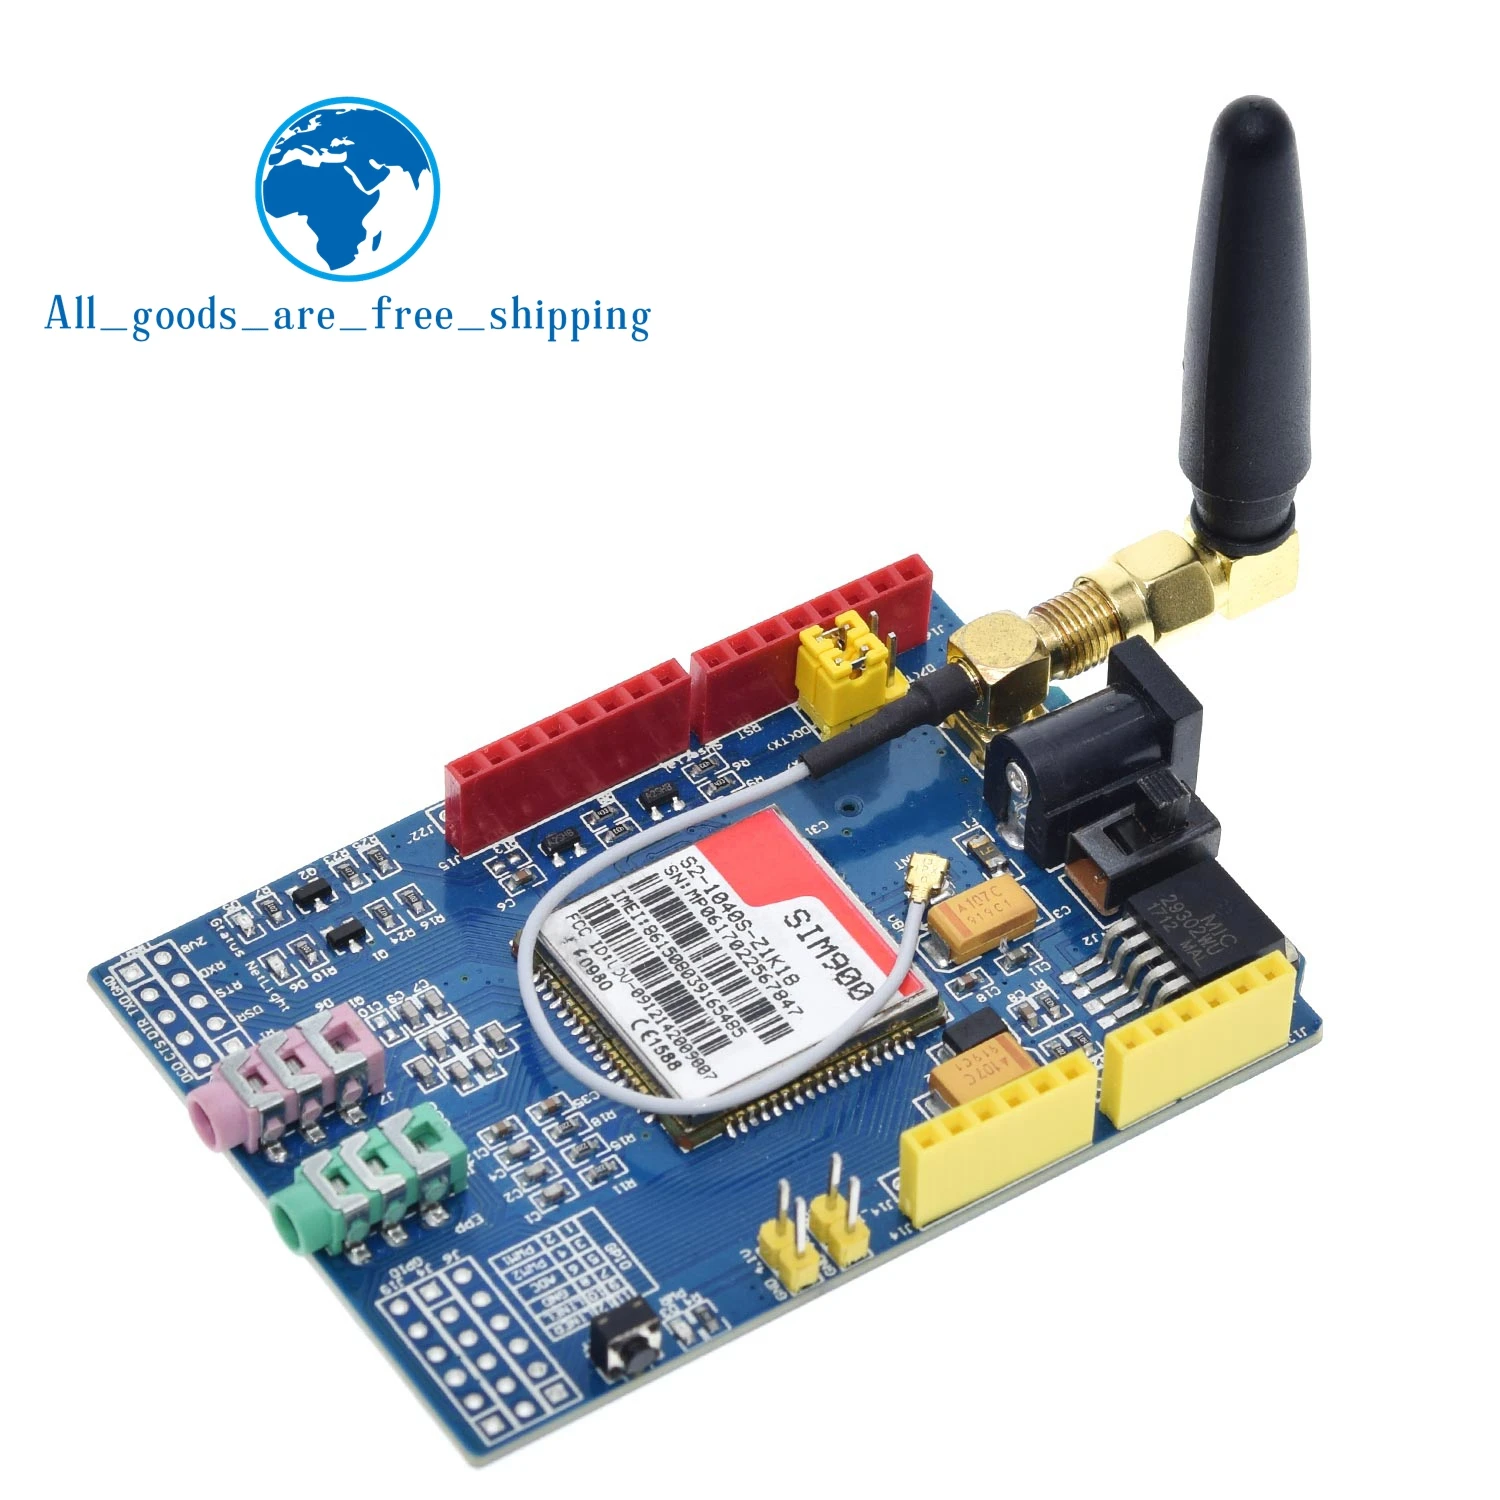 SIM900 850/900/1800/1900 МГц GPRS/GSM модуль макетной платы комплект для Arduino